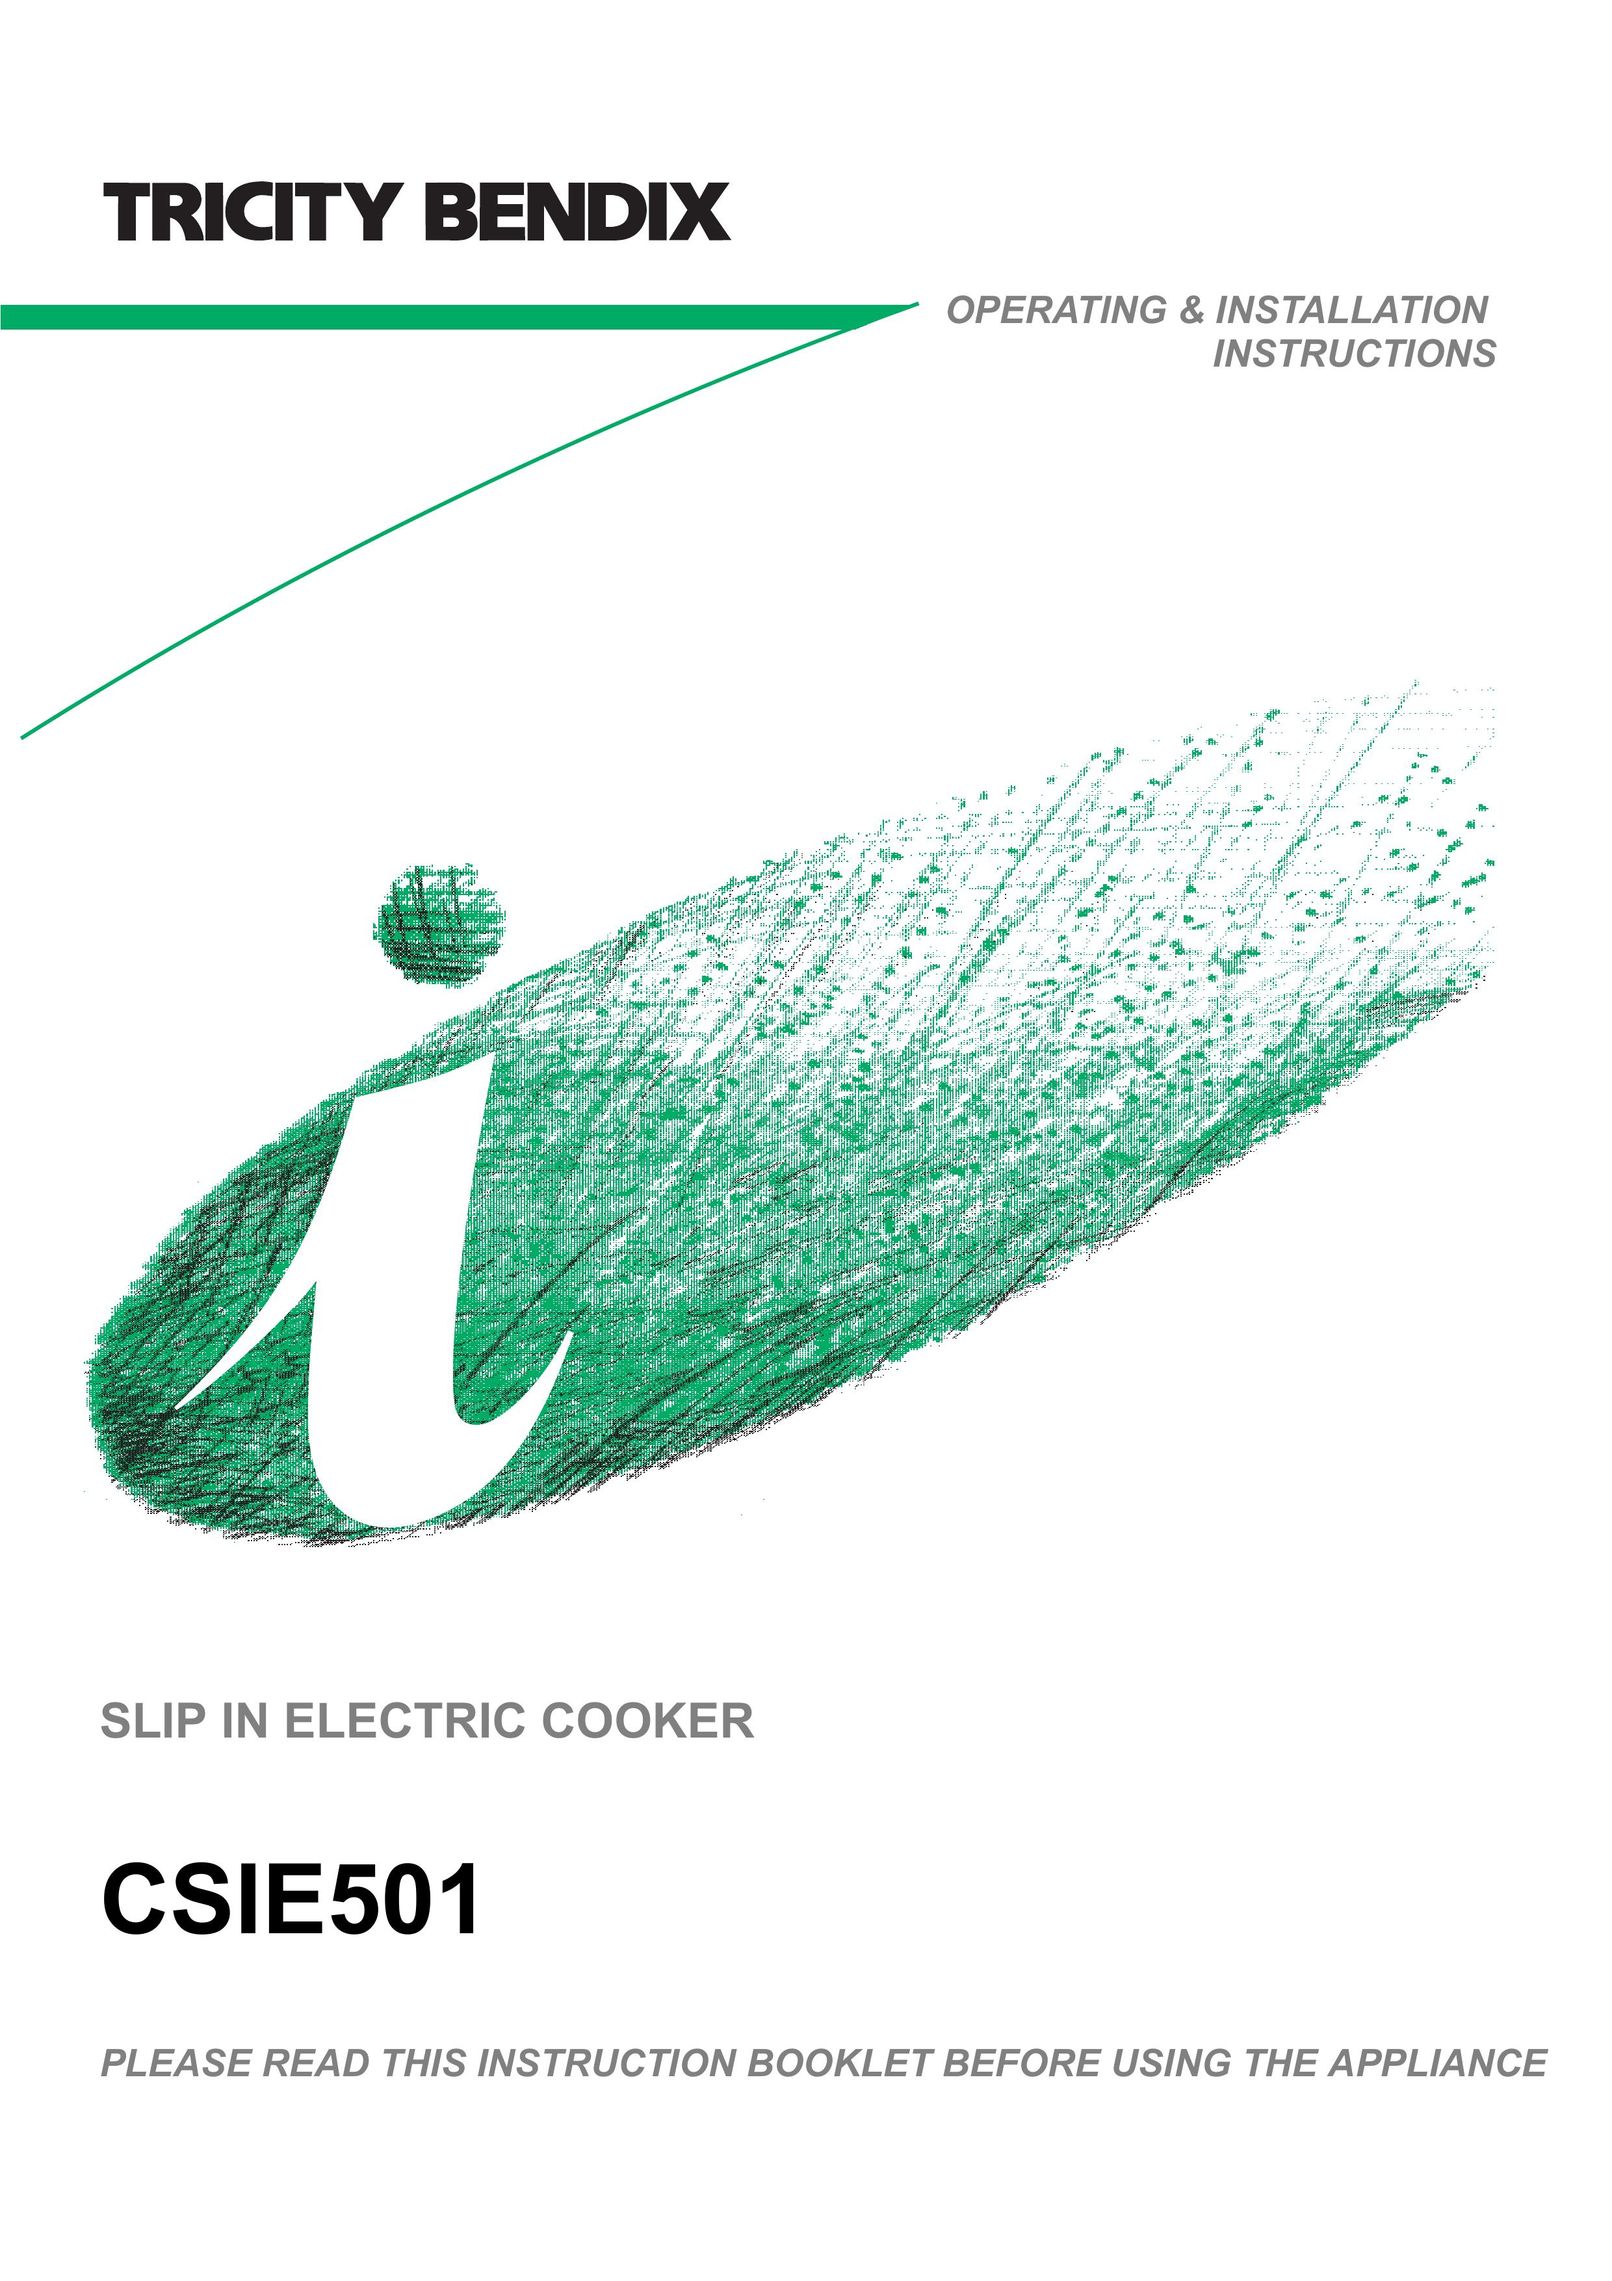 Tricity Bendix CSIE501 Cooktop User Manual